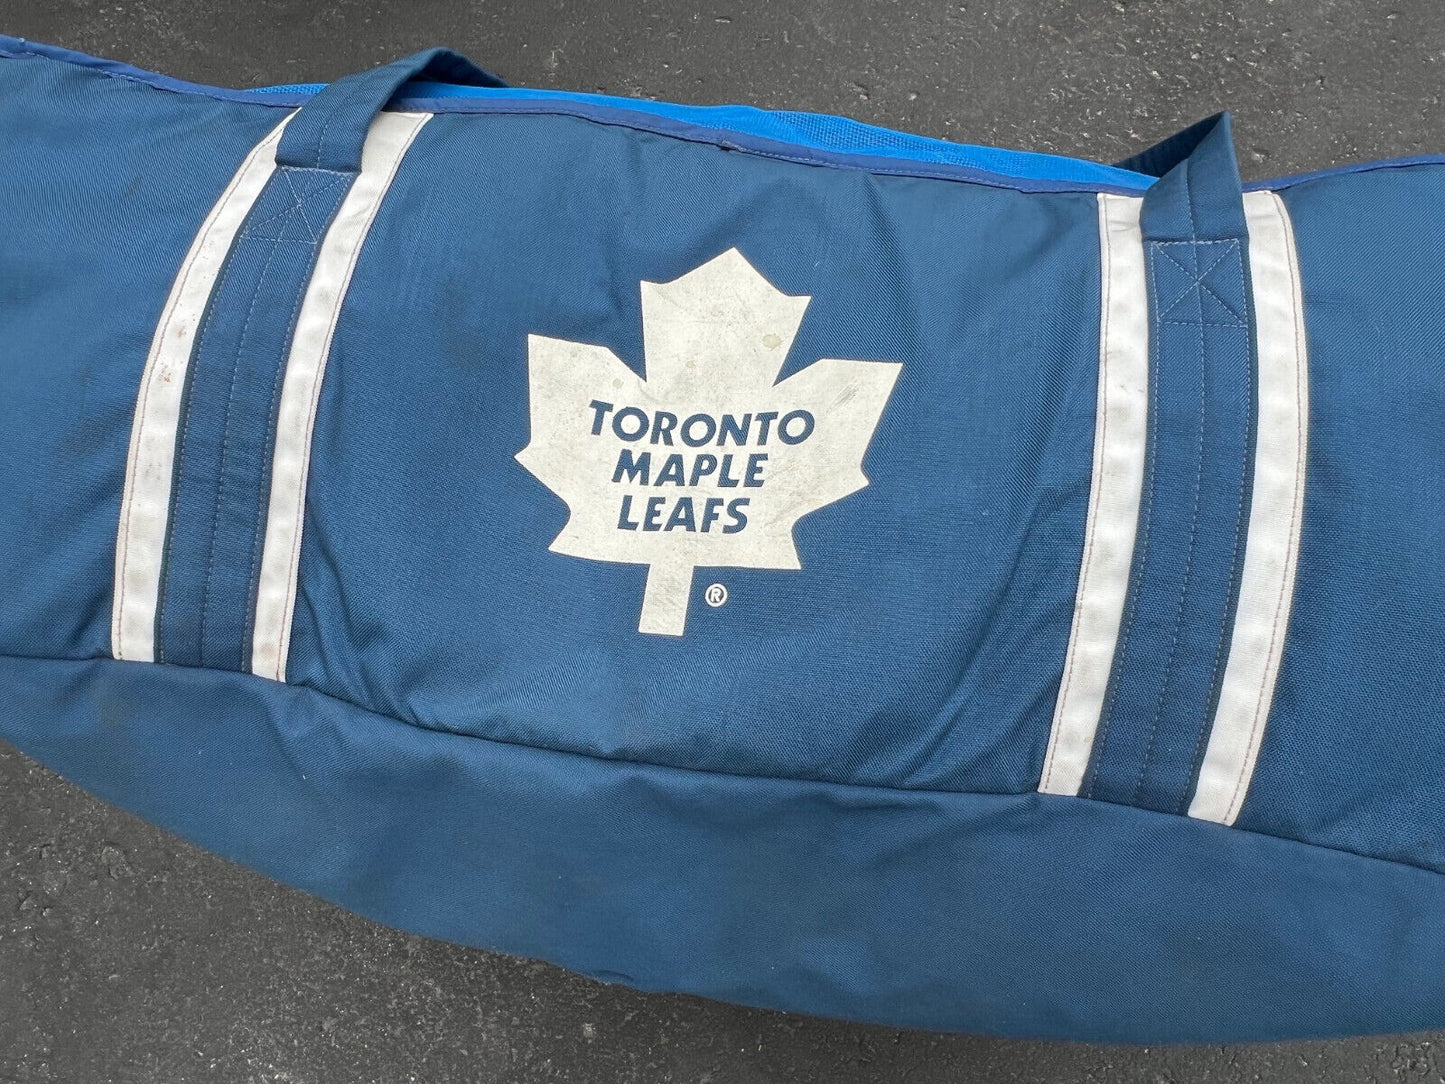 JRZ Toronto Maple Leafs NHL Pro Stock Hockey Padded Equipment Travel Bag Goalie